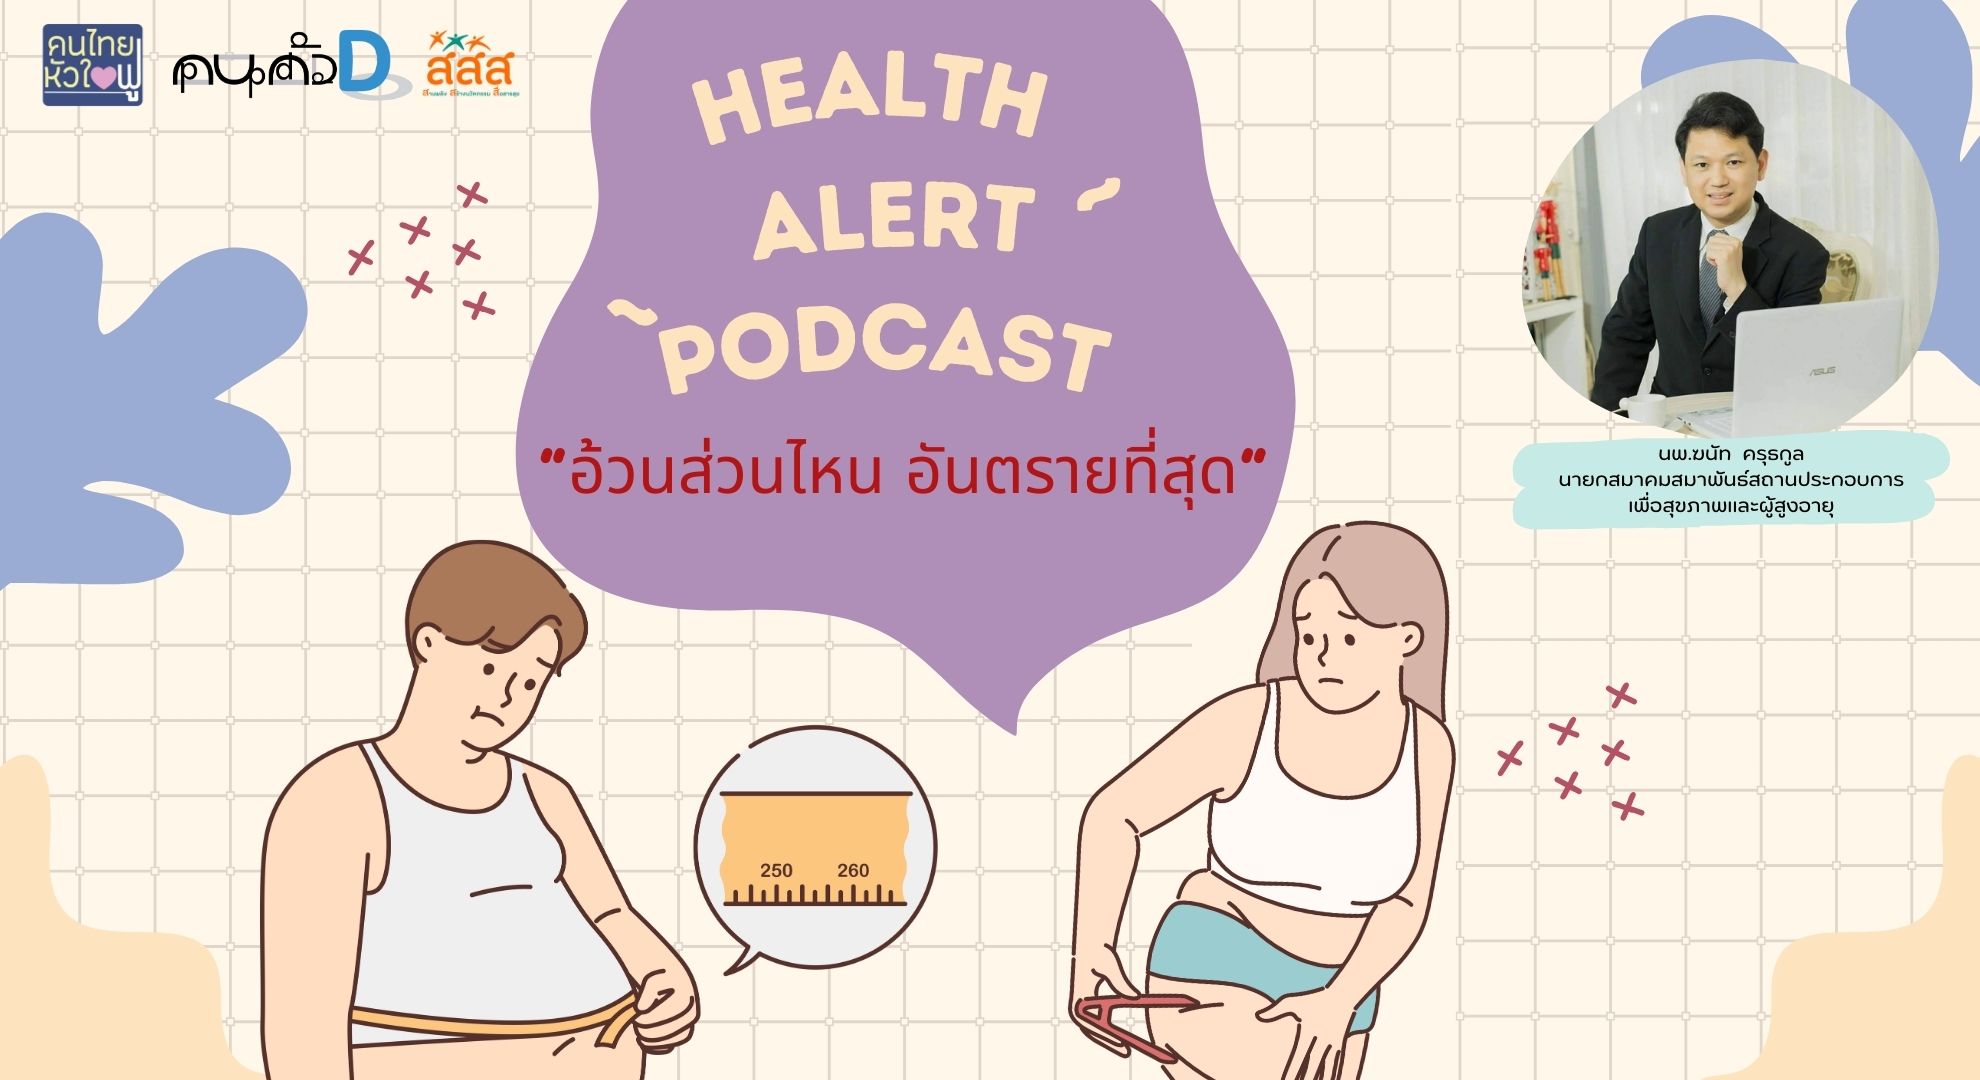 The Family Podcast Health Alert Podcast EP06 อ้วนส่วนไหน อันตรายที่สุด